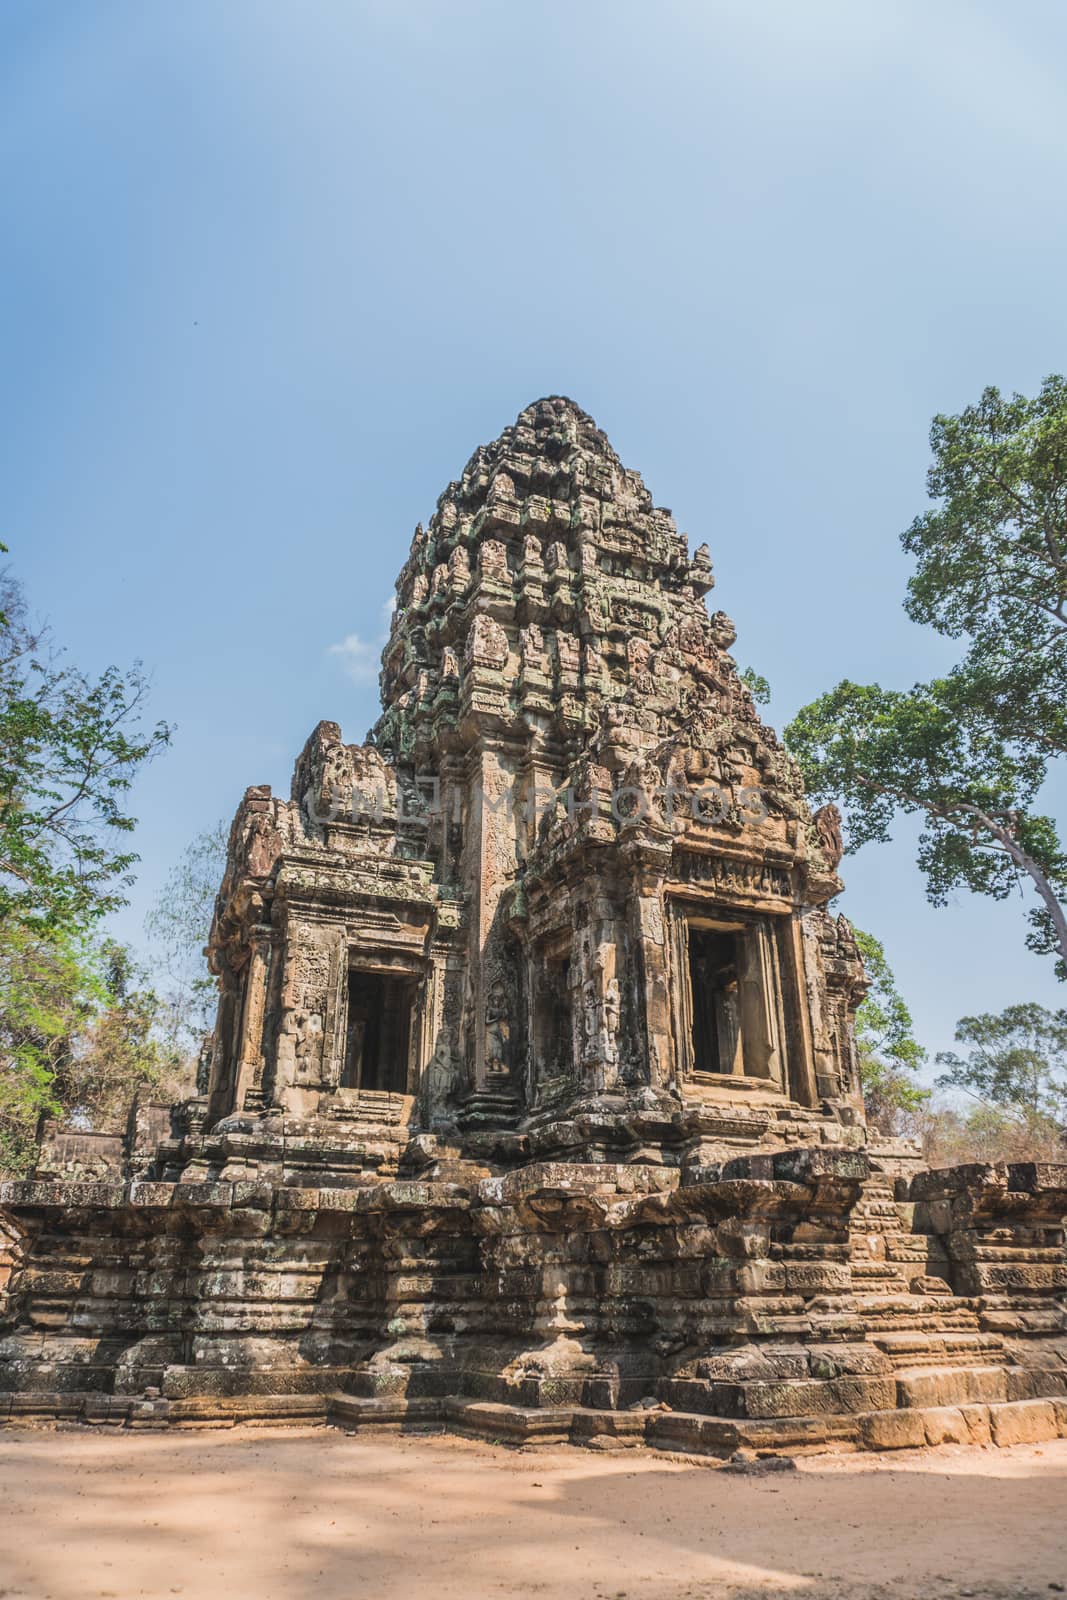 Ancient Angkor Wat Ruins Panorama. Thommanon Temple. Siem Reap, Cambodia